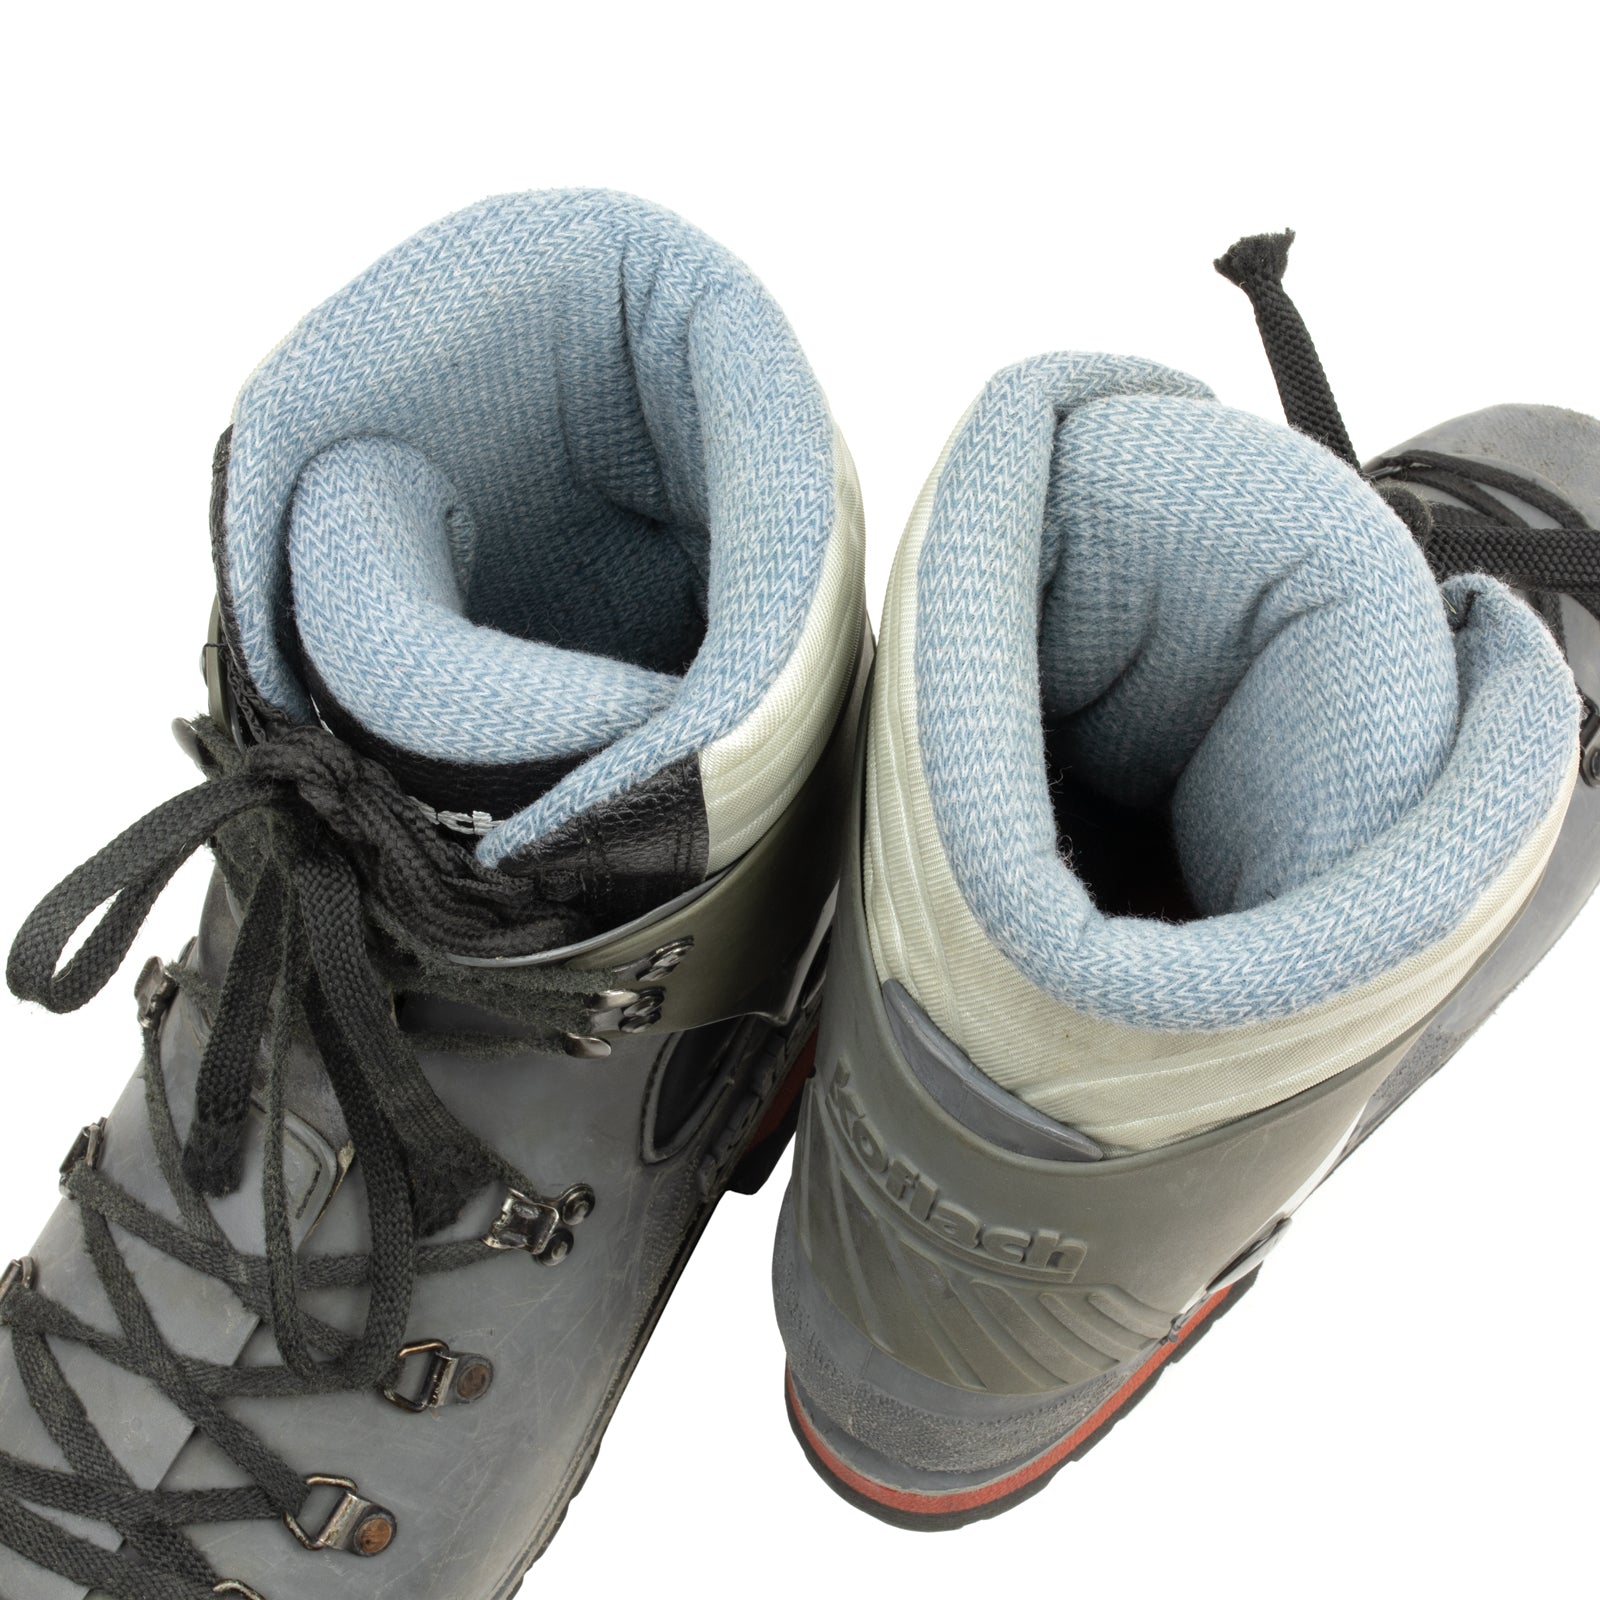 Austrian Army Mountaineering Boots | Koflach Ice Climbing